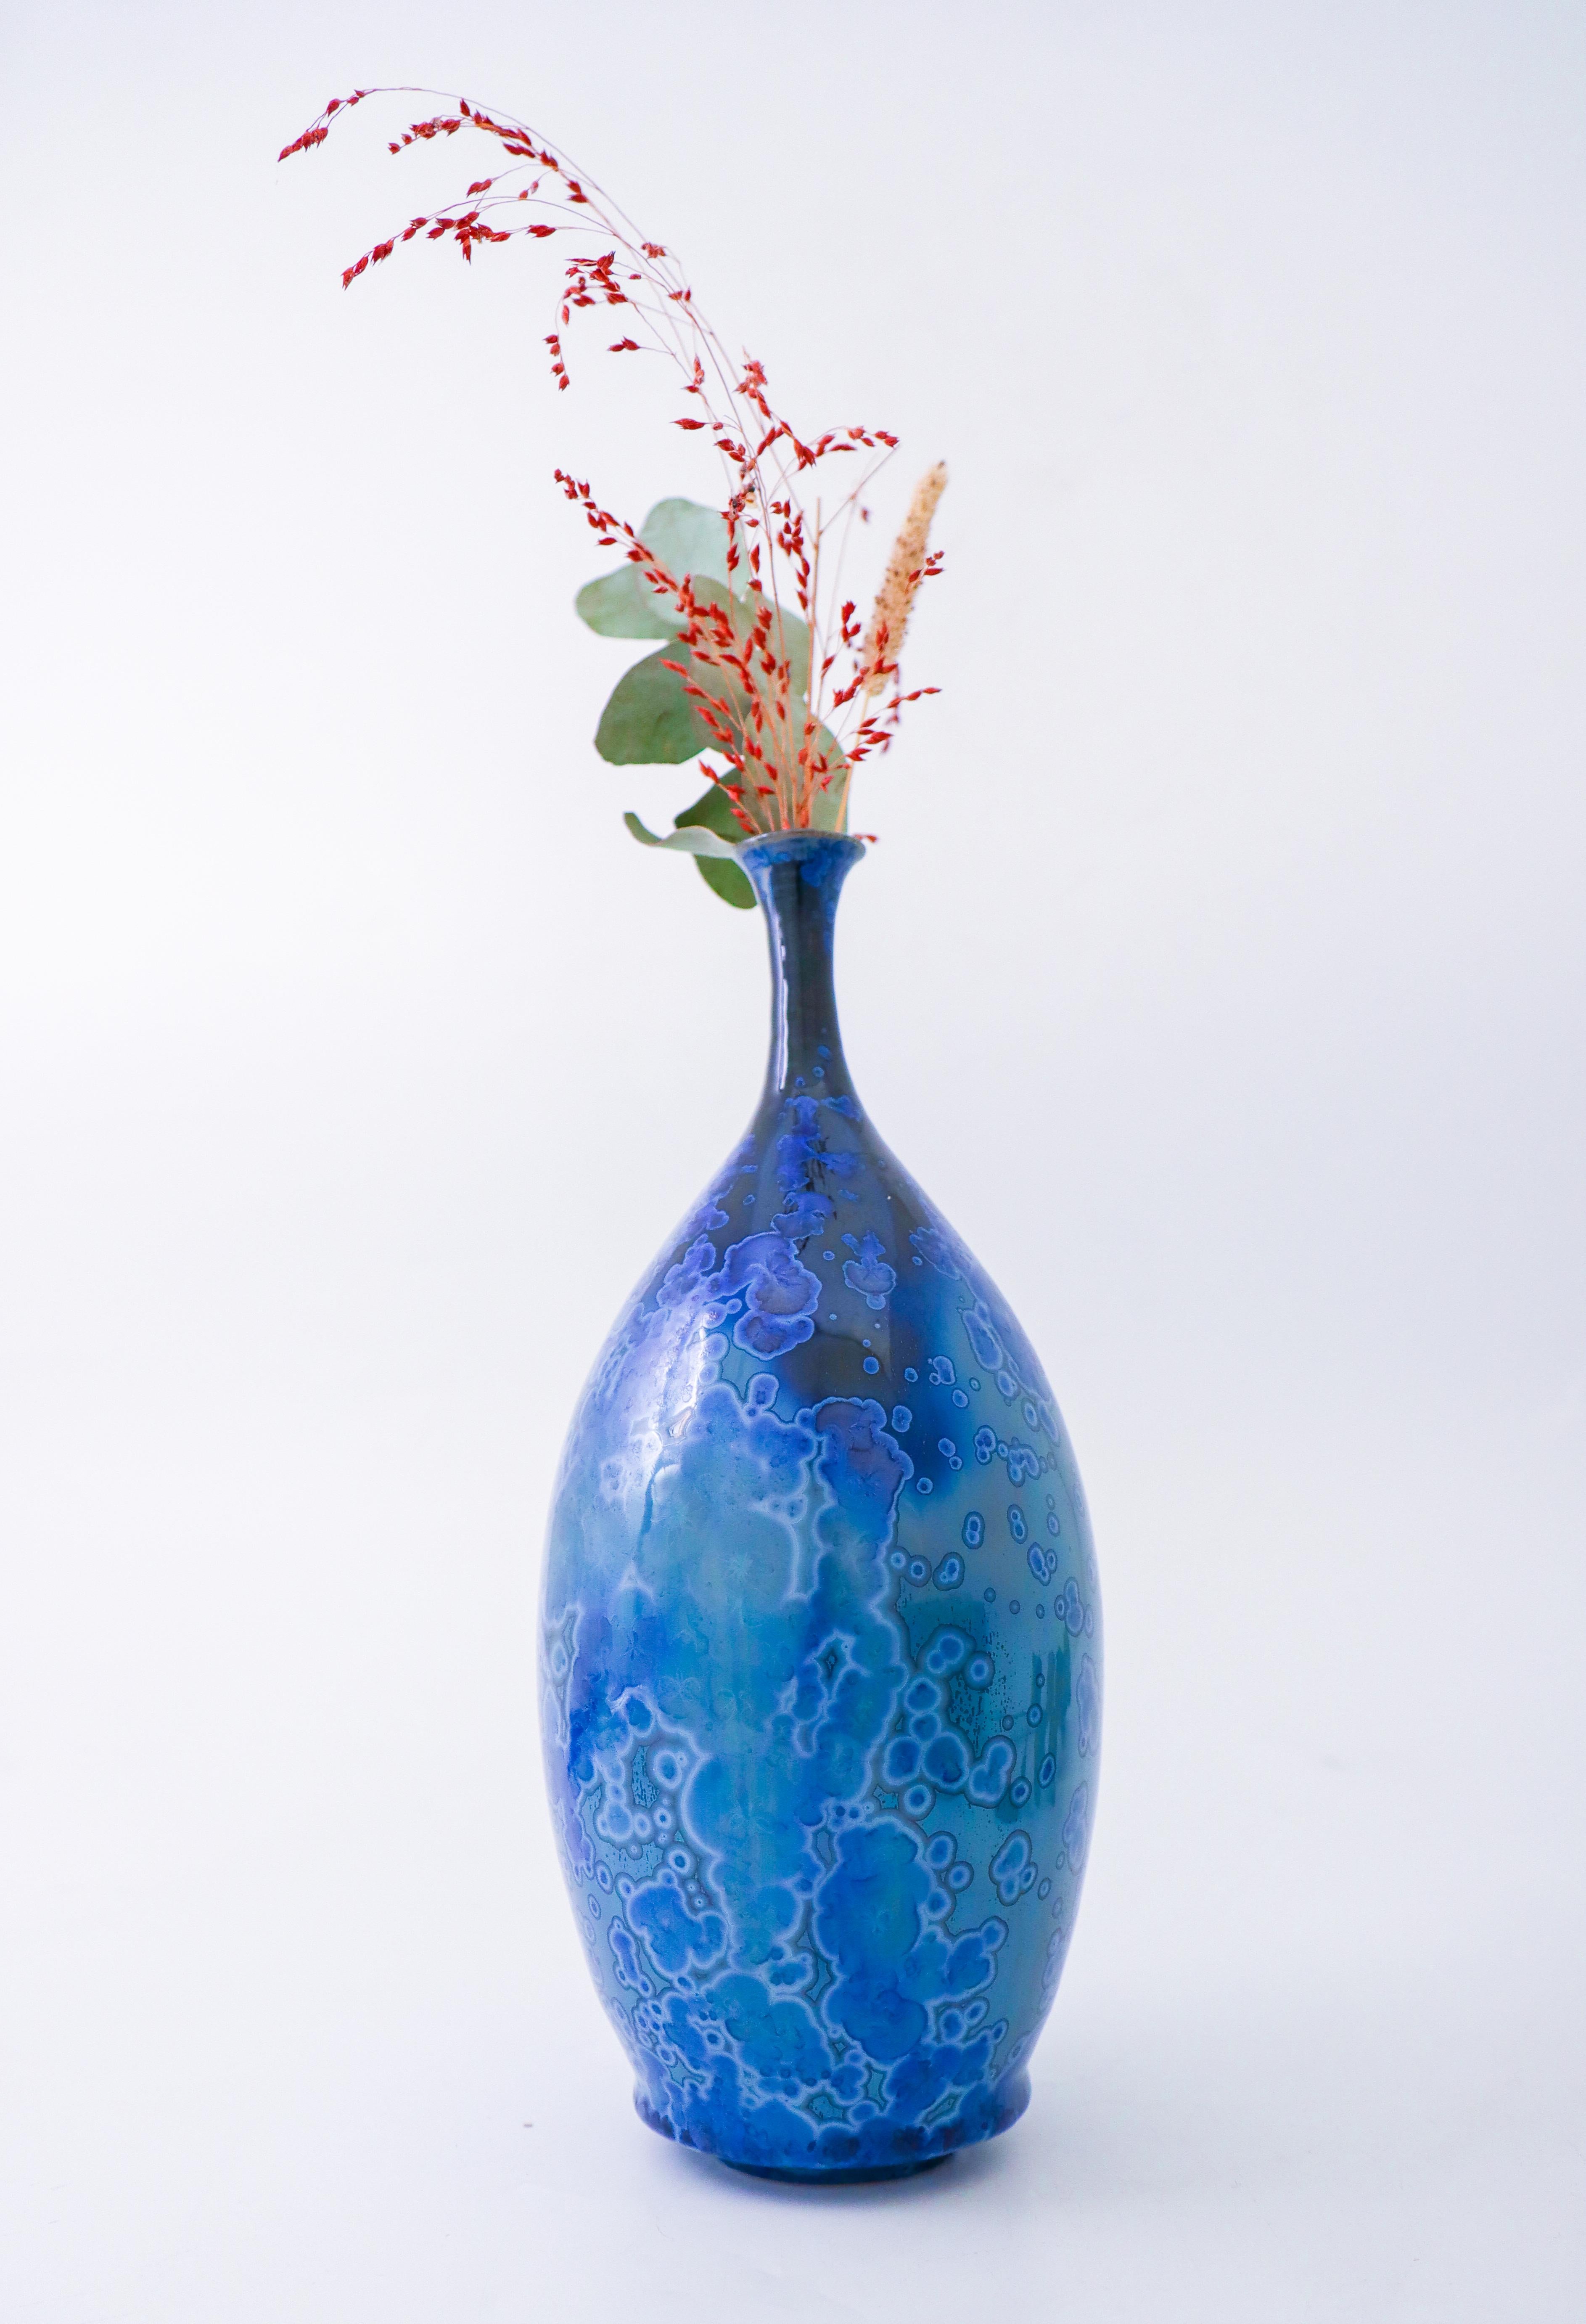 Scandinavian Modern Isak Isaksson Blue Ceramic Vase Crystalline Glaze Contemporary Artist For Sale